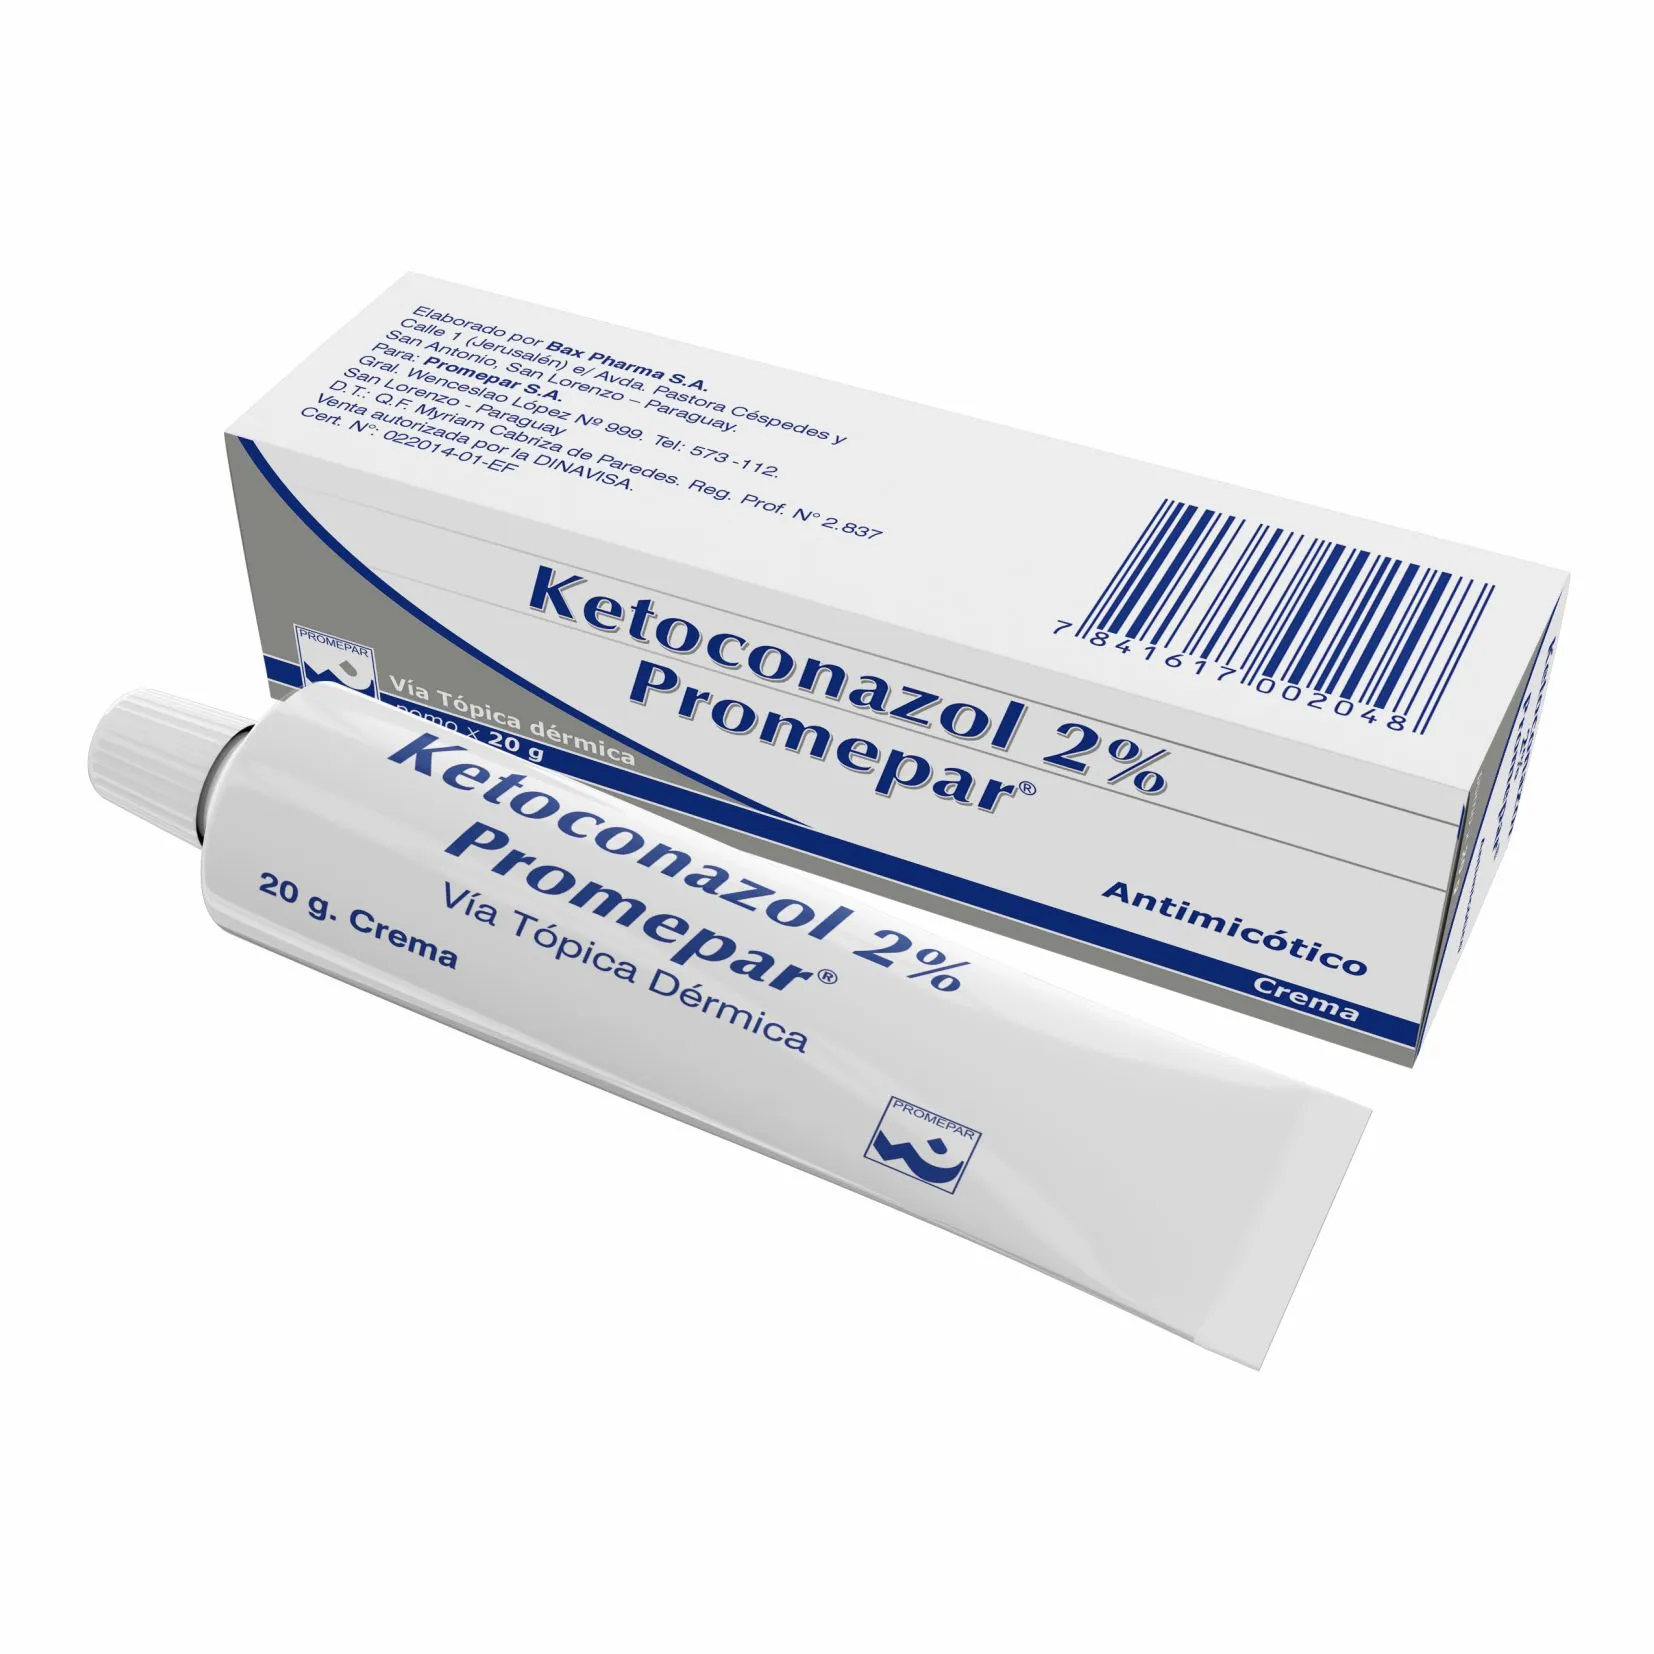 Ketoconazol 2% Promepar -  Cont. 20 gr.